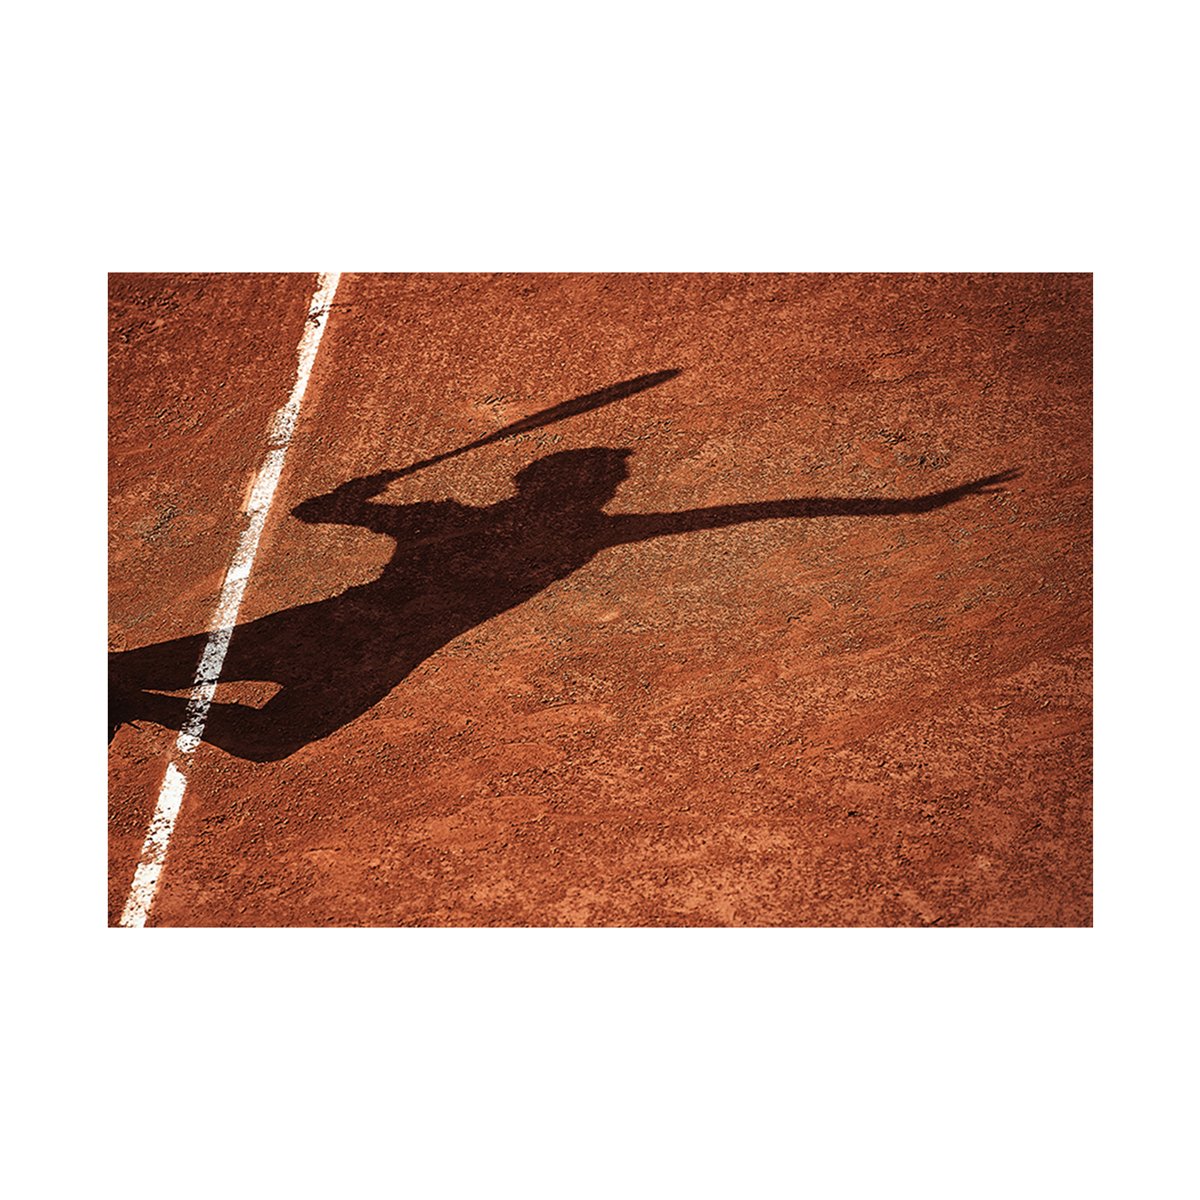  Photo  Terre battue Ombre  21 x 29 7 cm Roland Garros 